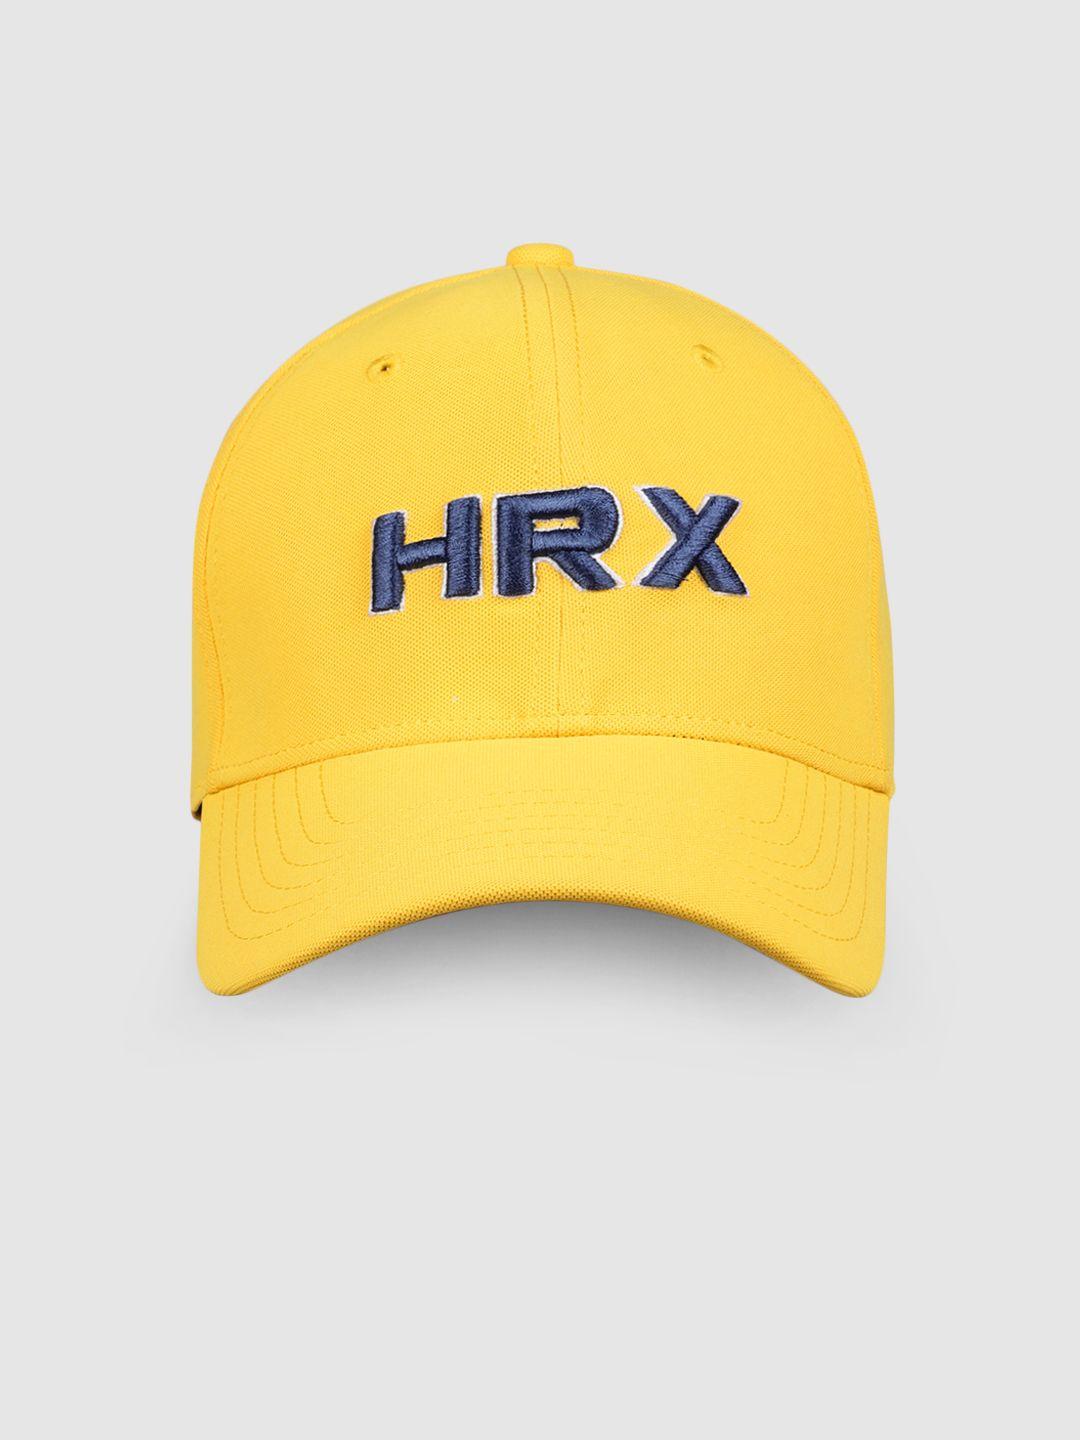 hrx by hrithik roshan unisex yellow baseball cap